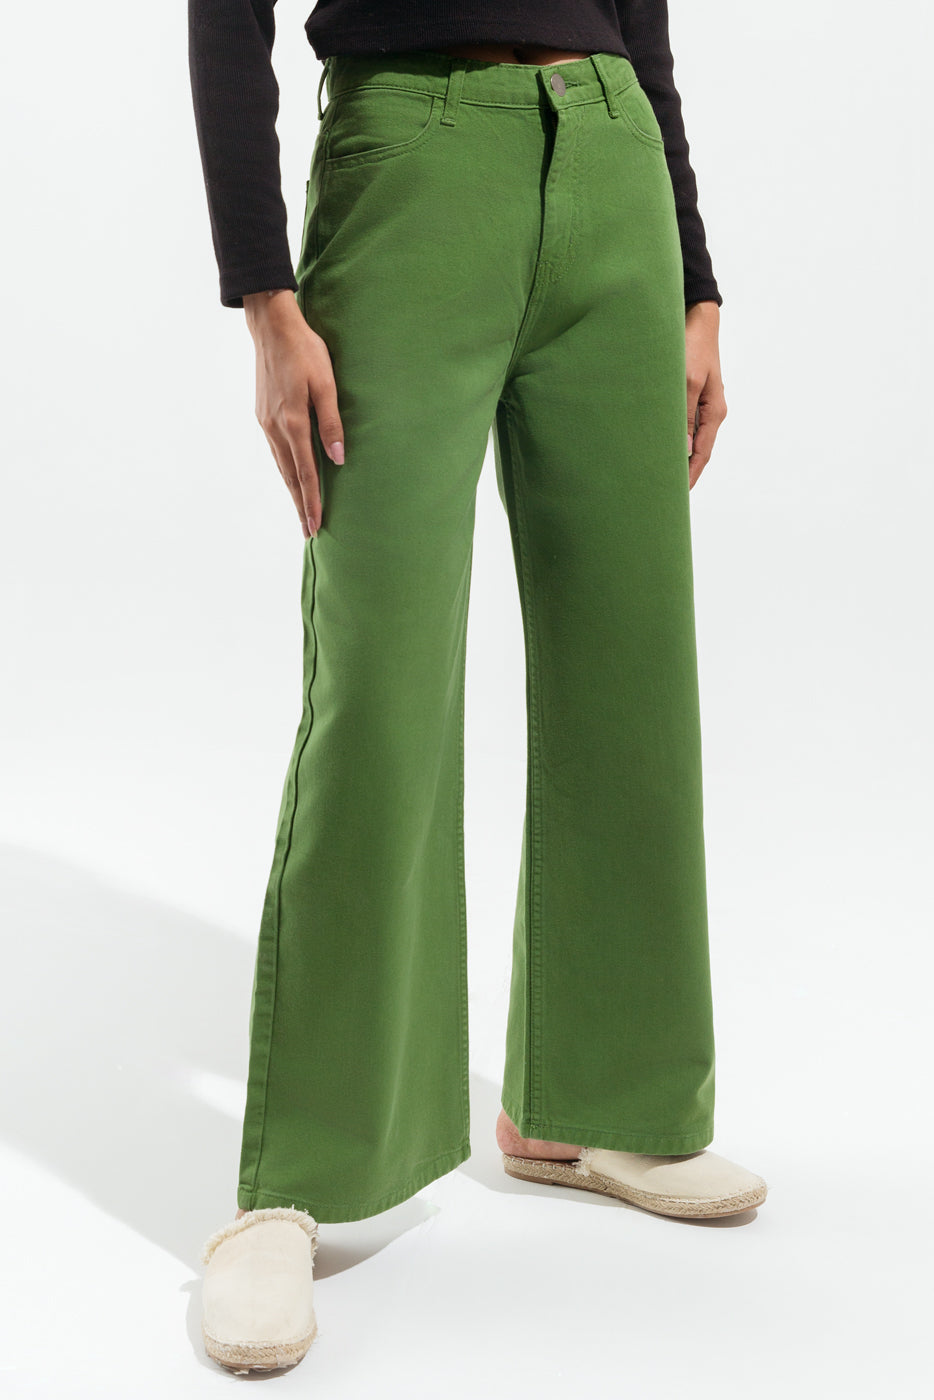 Green Full Length Wide Leg Pants - BEECHTREE